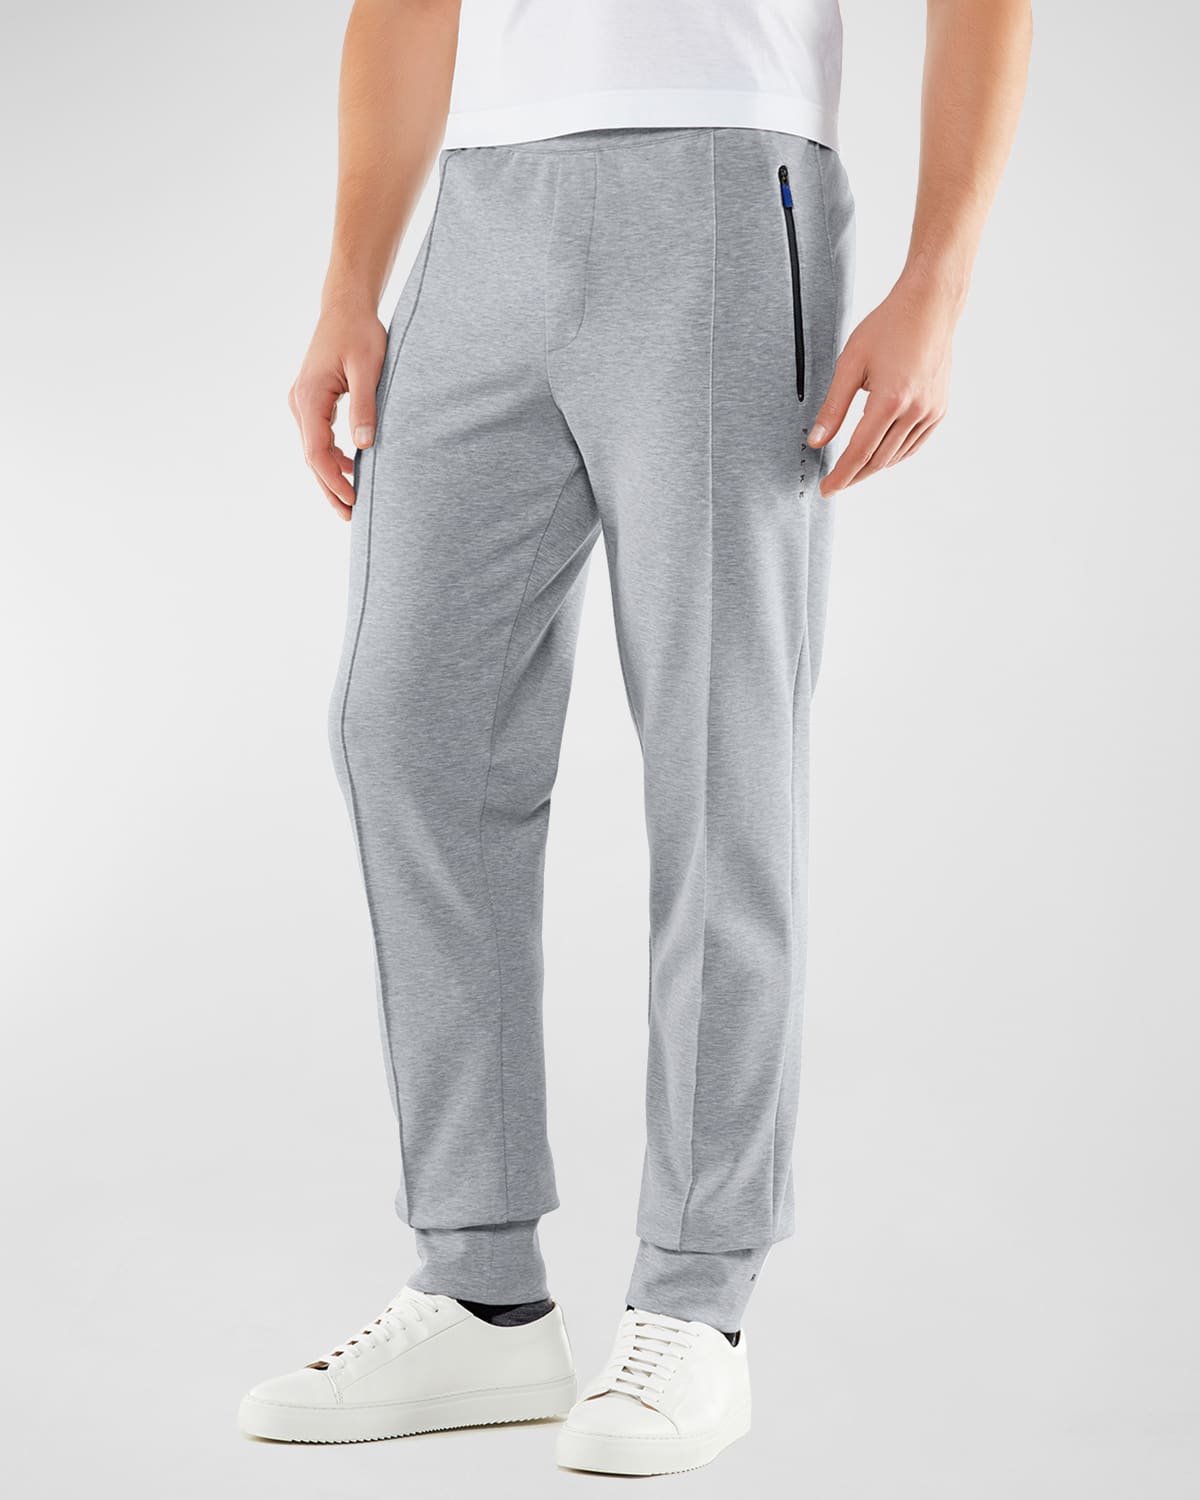 Falke Men's Coach Cotton-blend Pants In Grey Heather